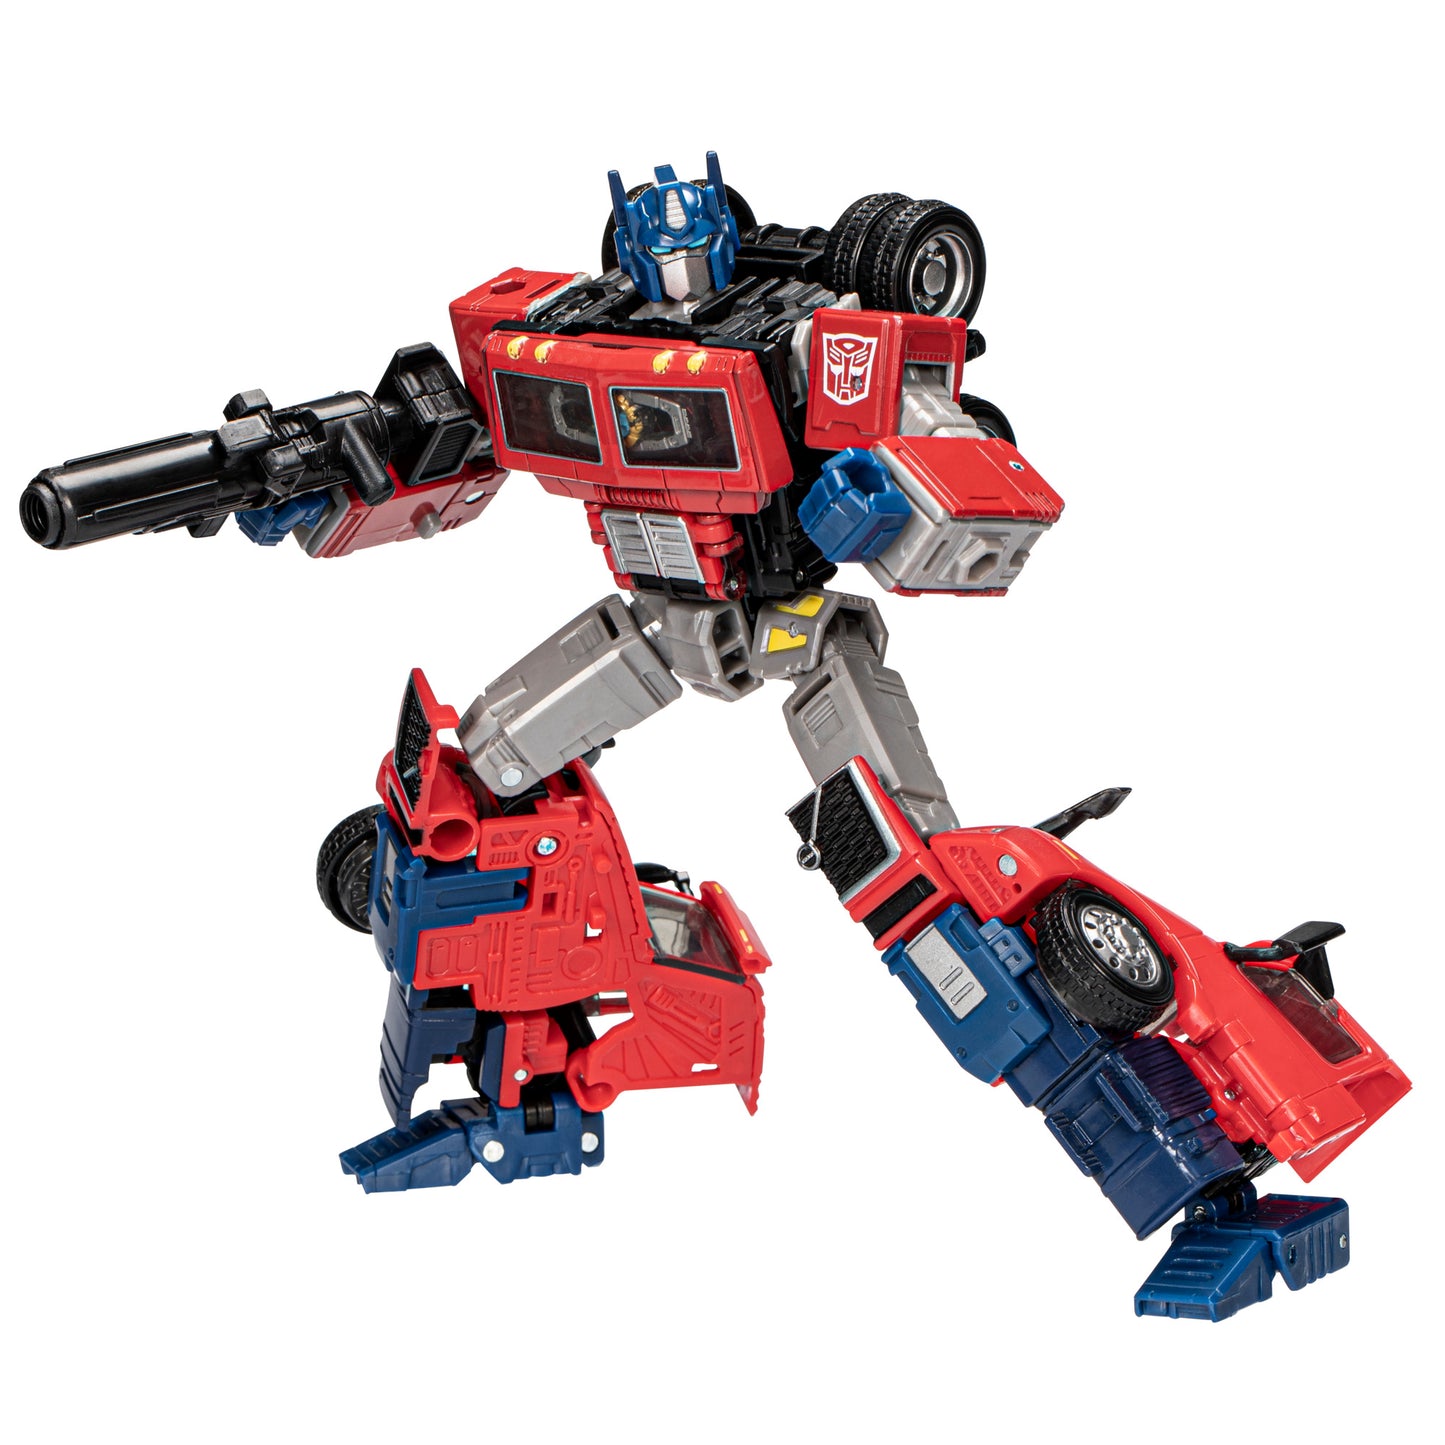 Transformers Generations - VNR Optimus Prime Action Figure Toy (Exclusive)